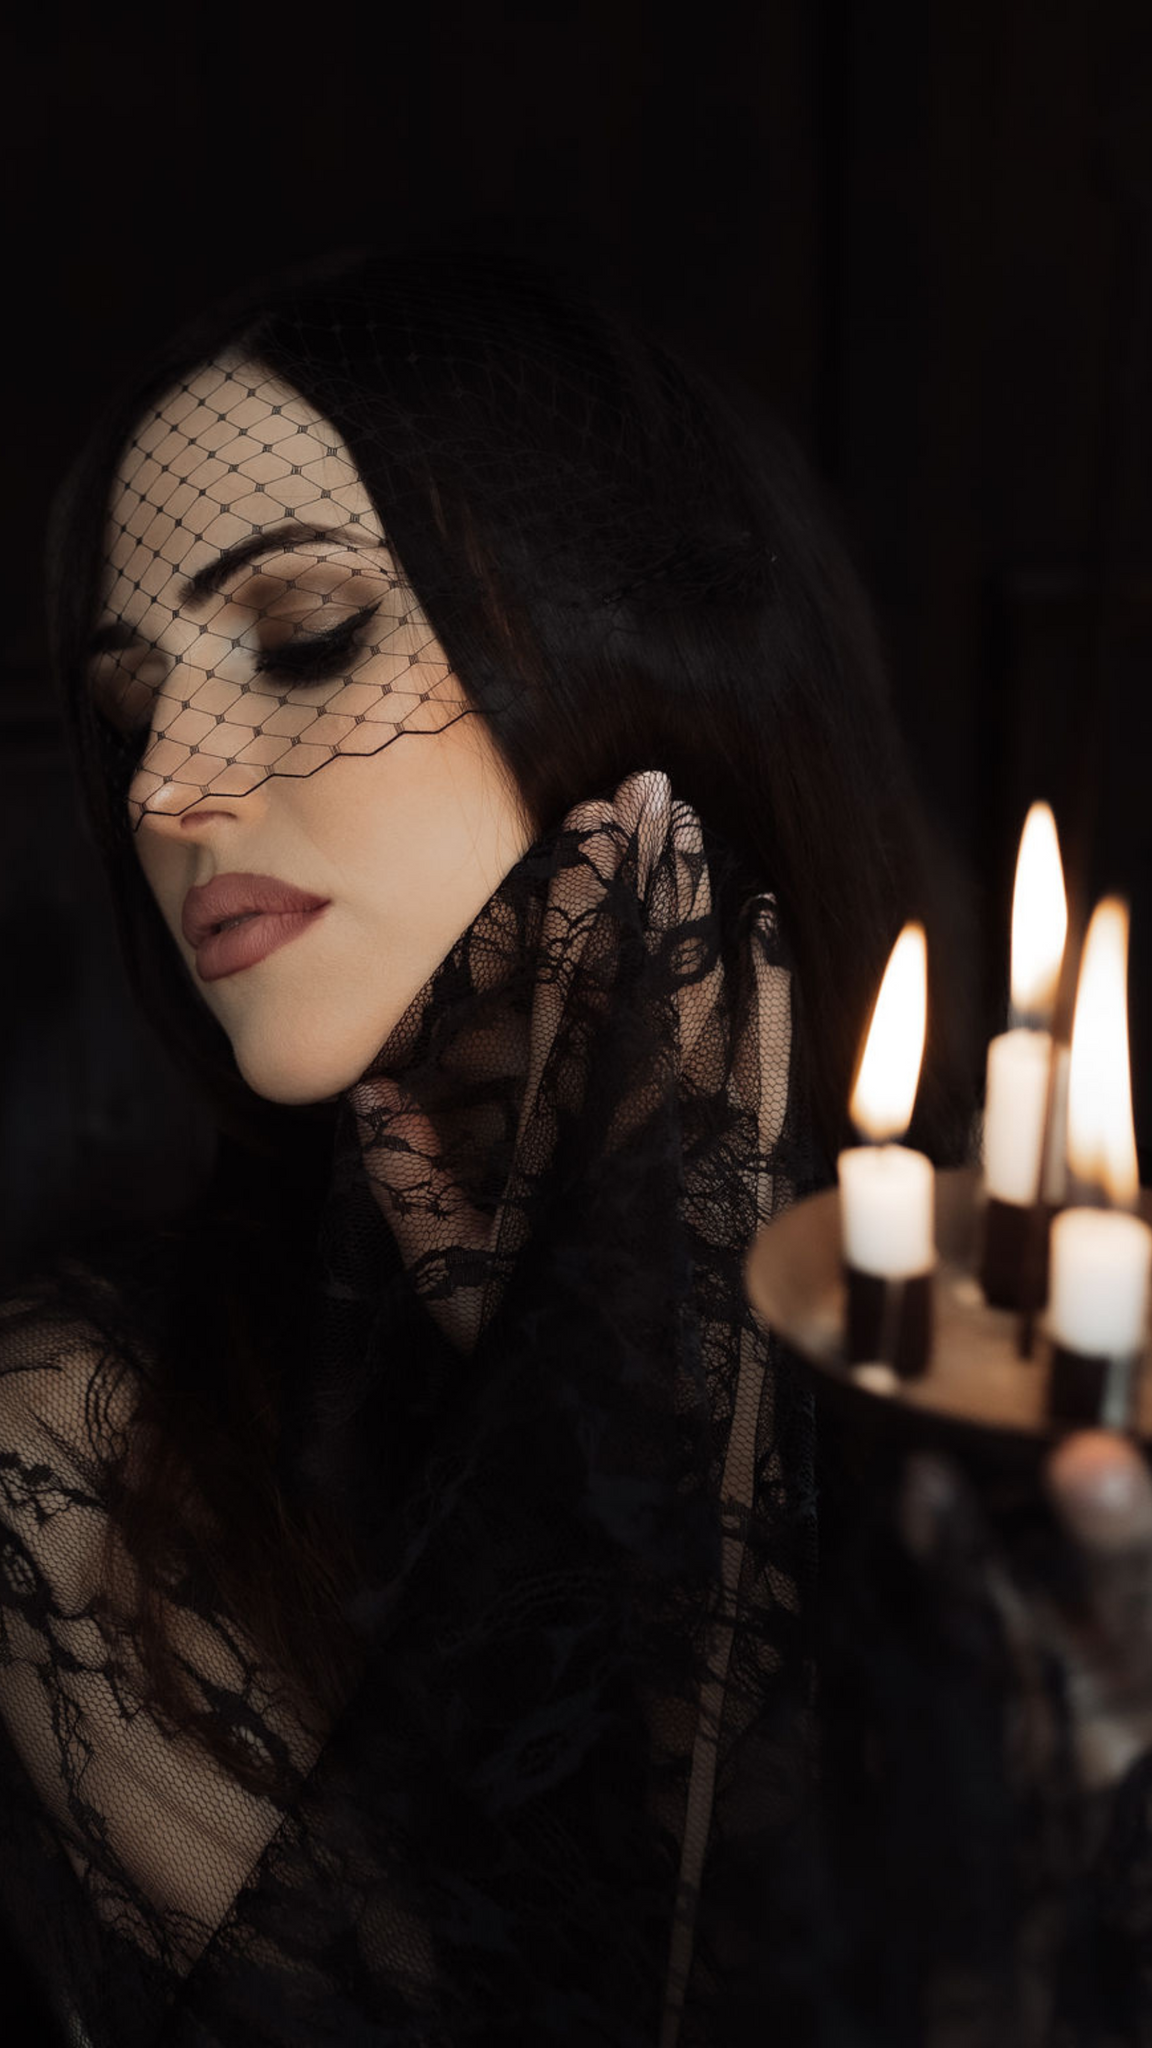 Gothic Wedding Inspiration - The Vampire Bride wears black mask style birdcage veil